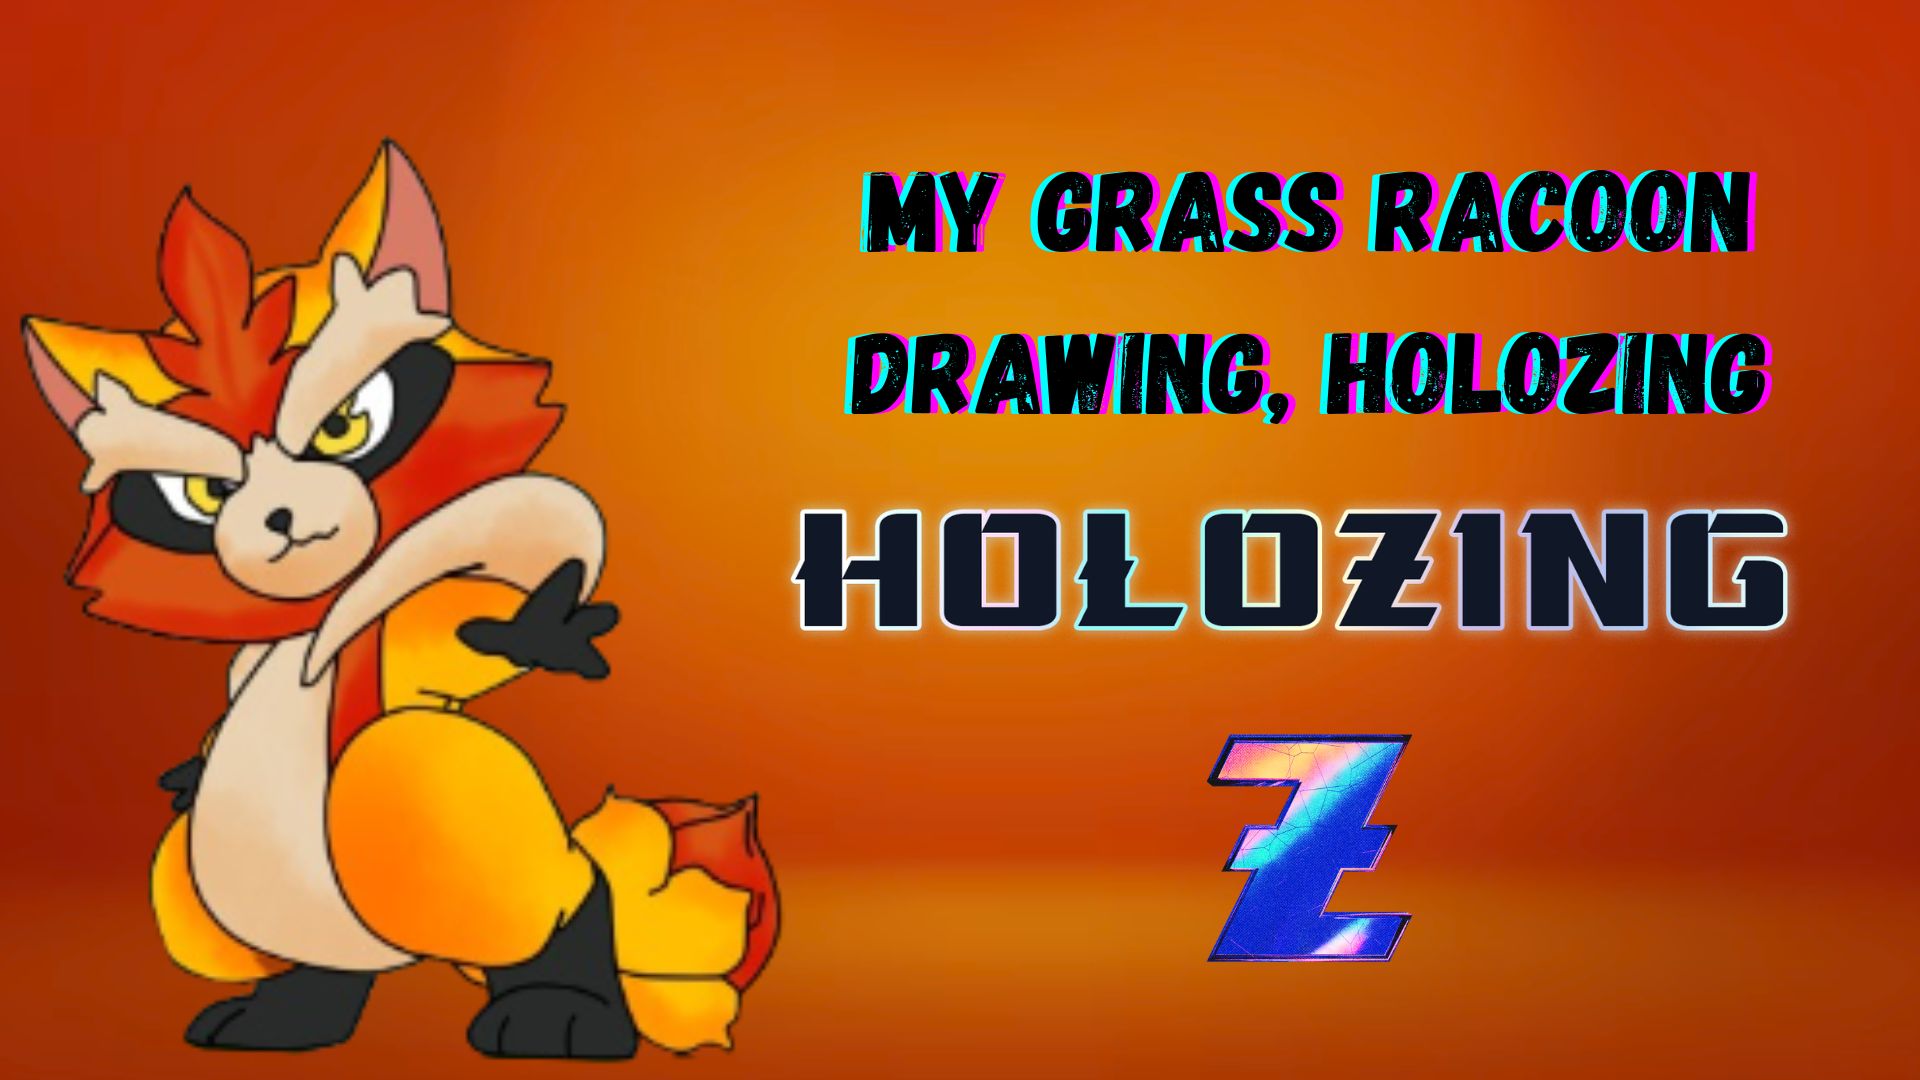 My Grass Racoon drawing, holozing.jpg